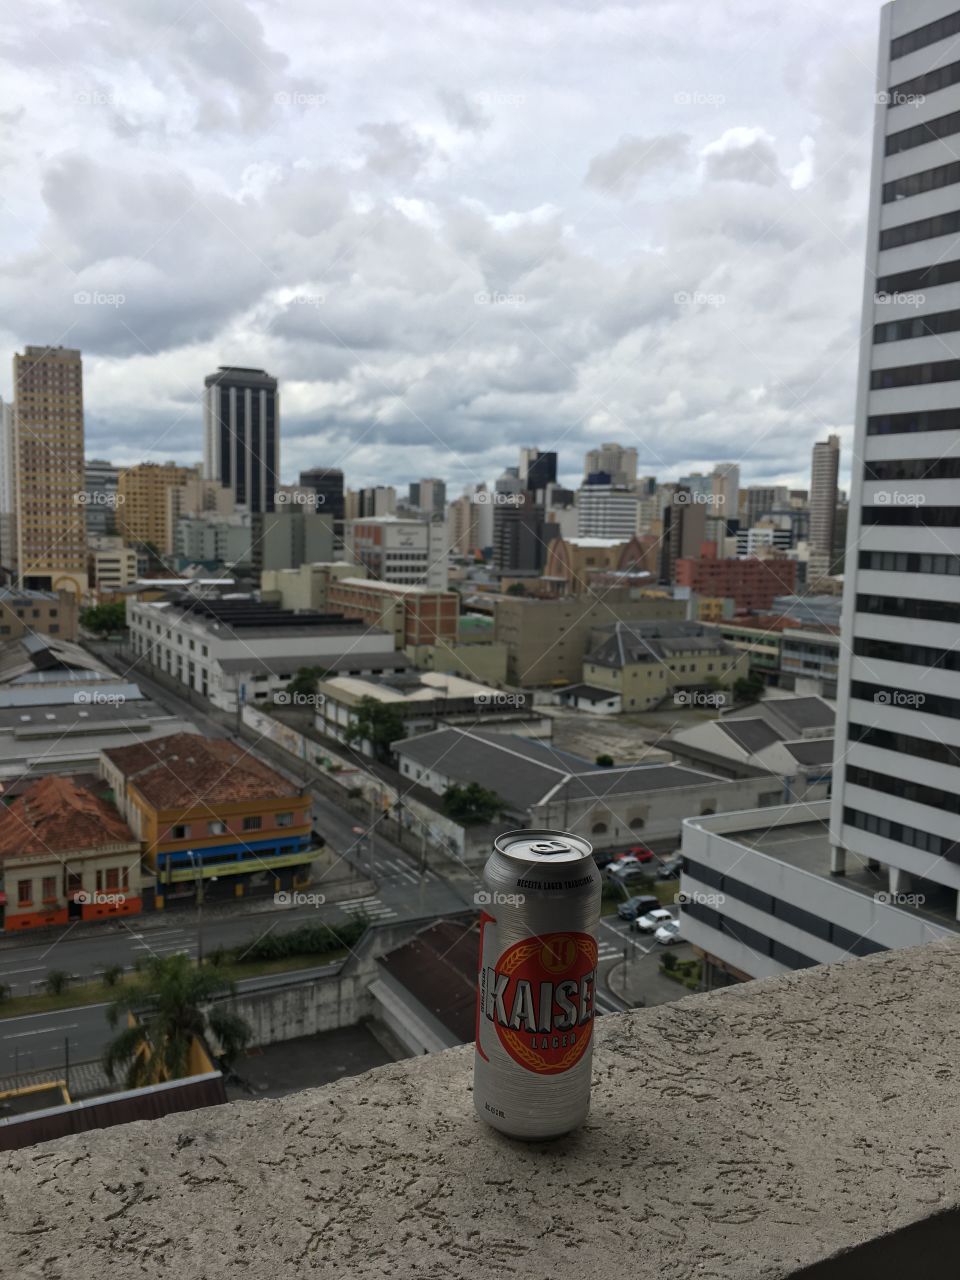 Cerveja Kaiser city Curitiba Brasil 